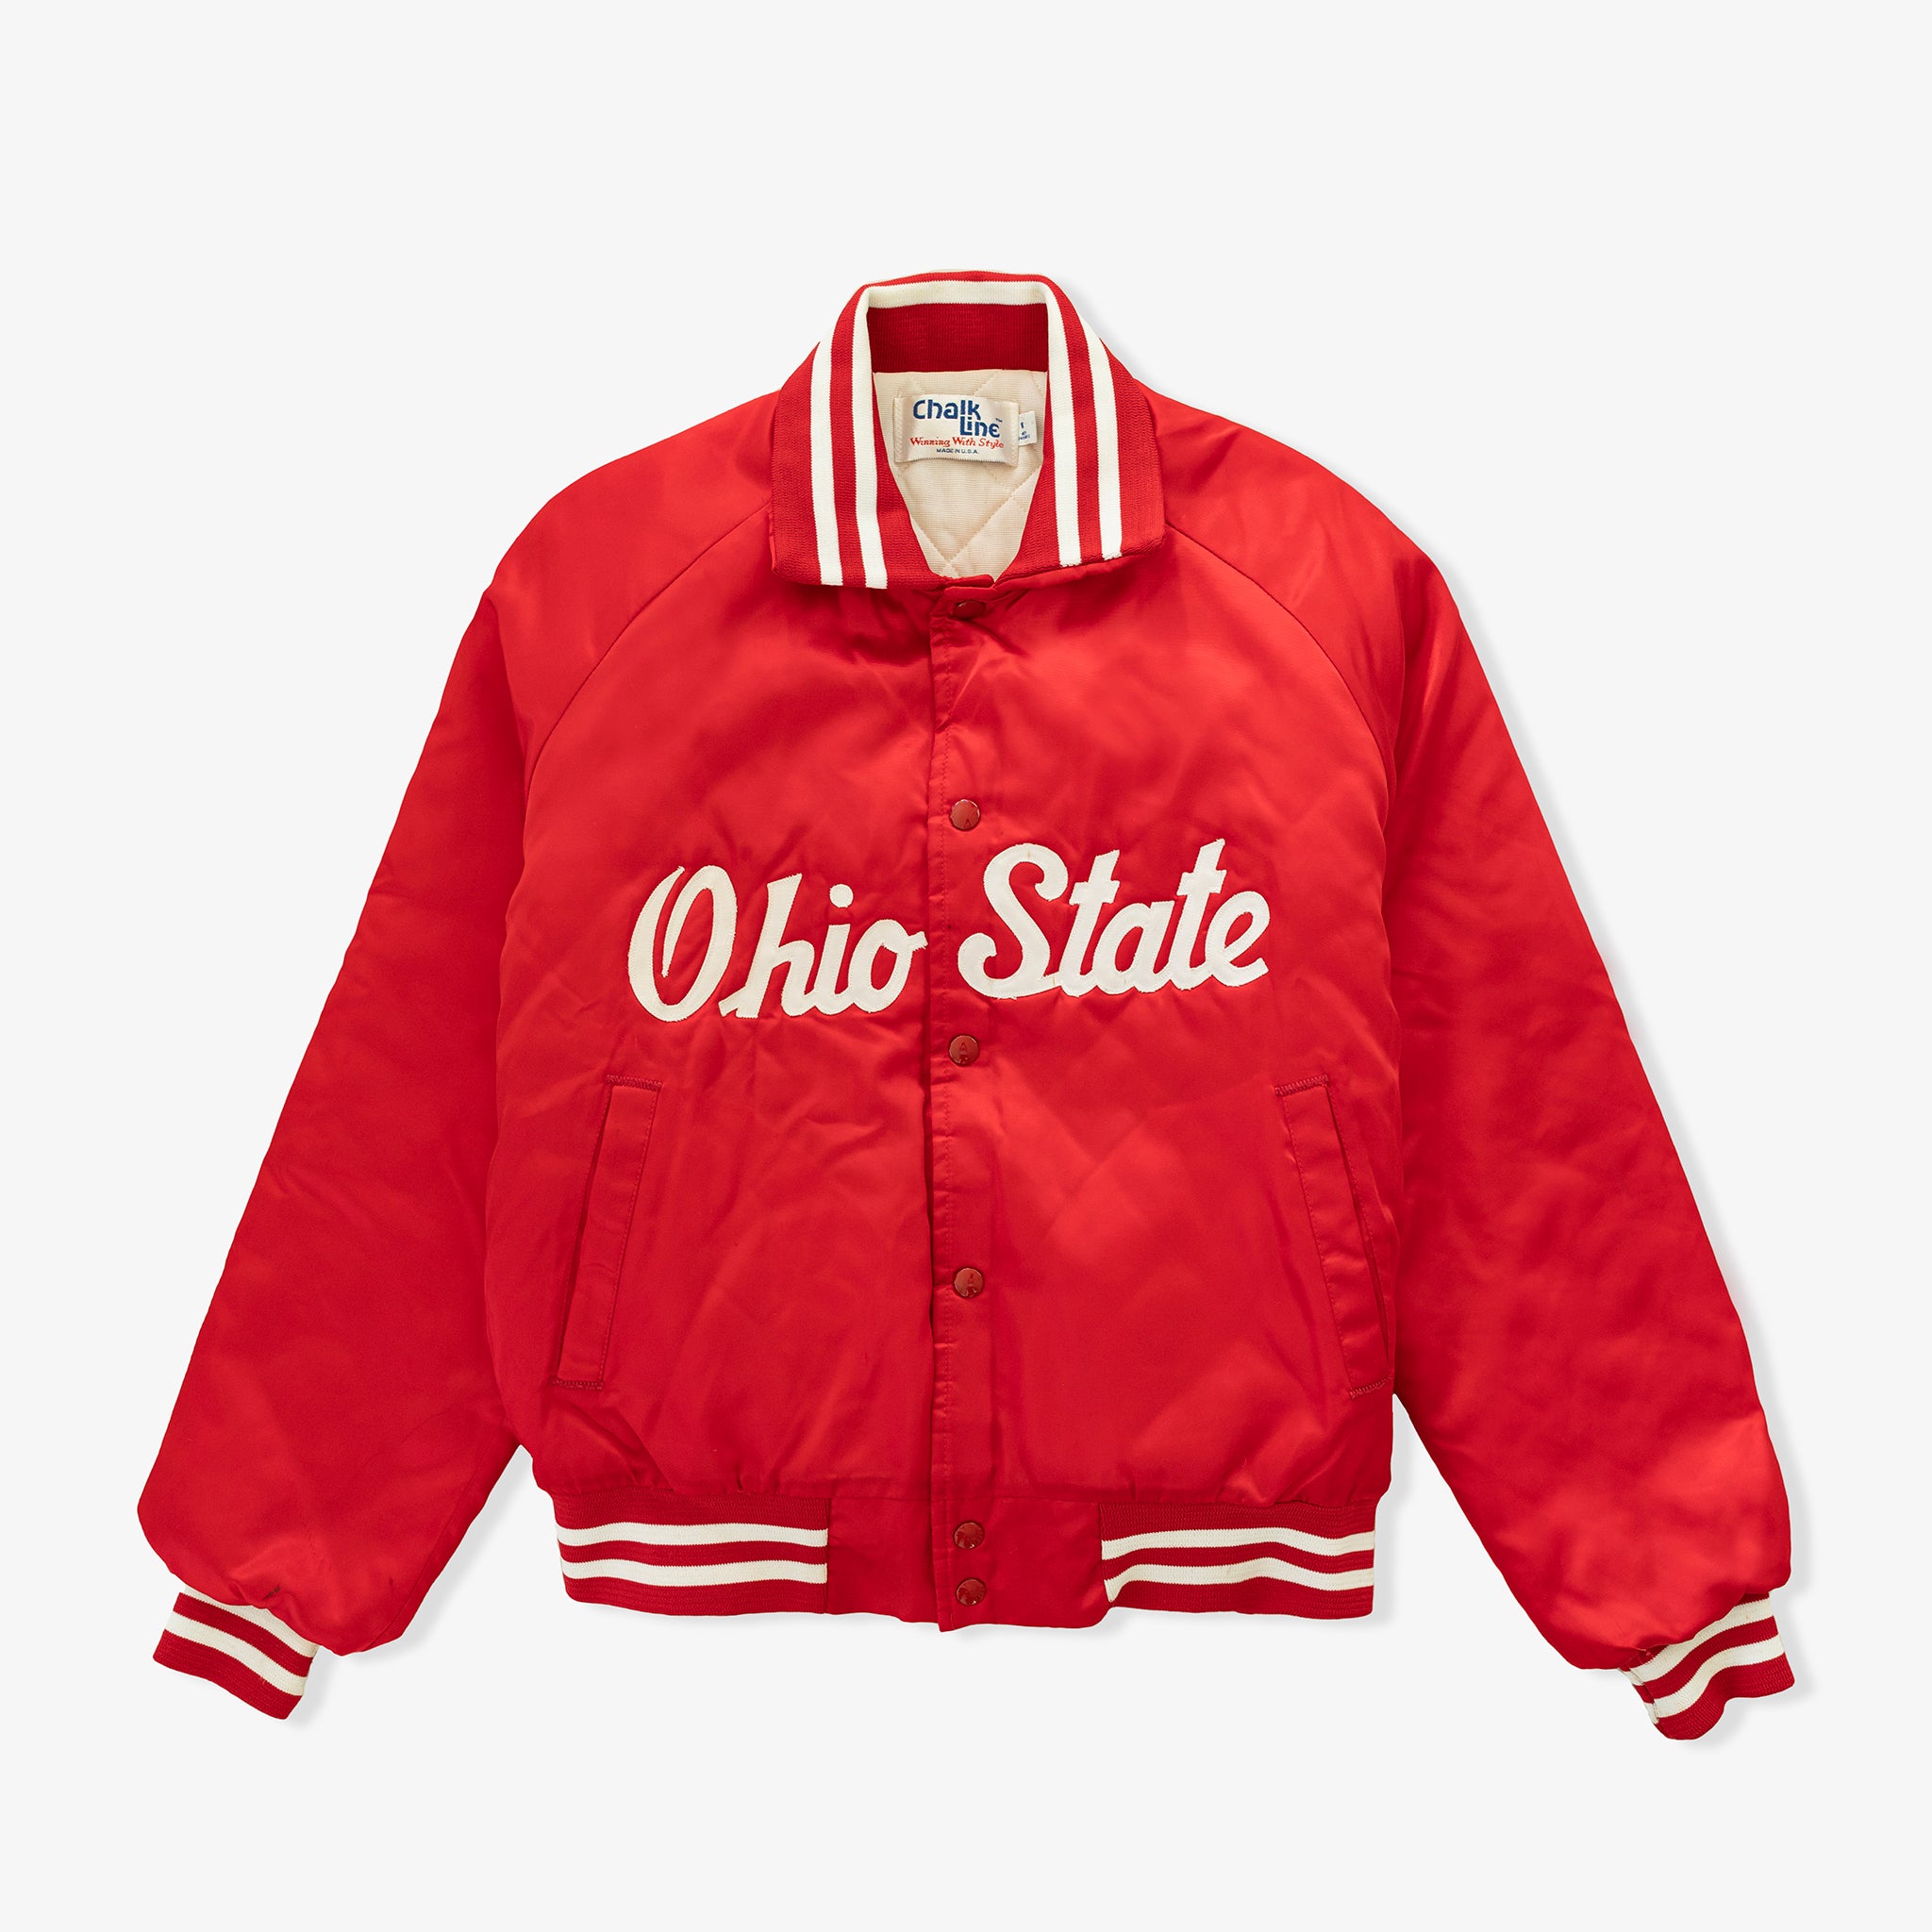 Ohio State Red Satin Jacket